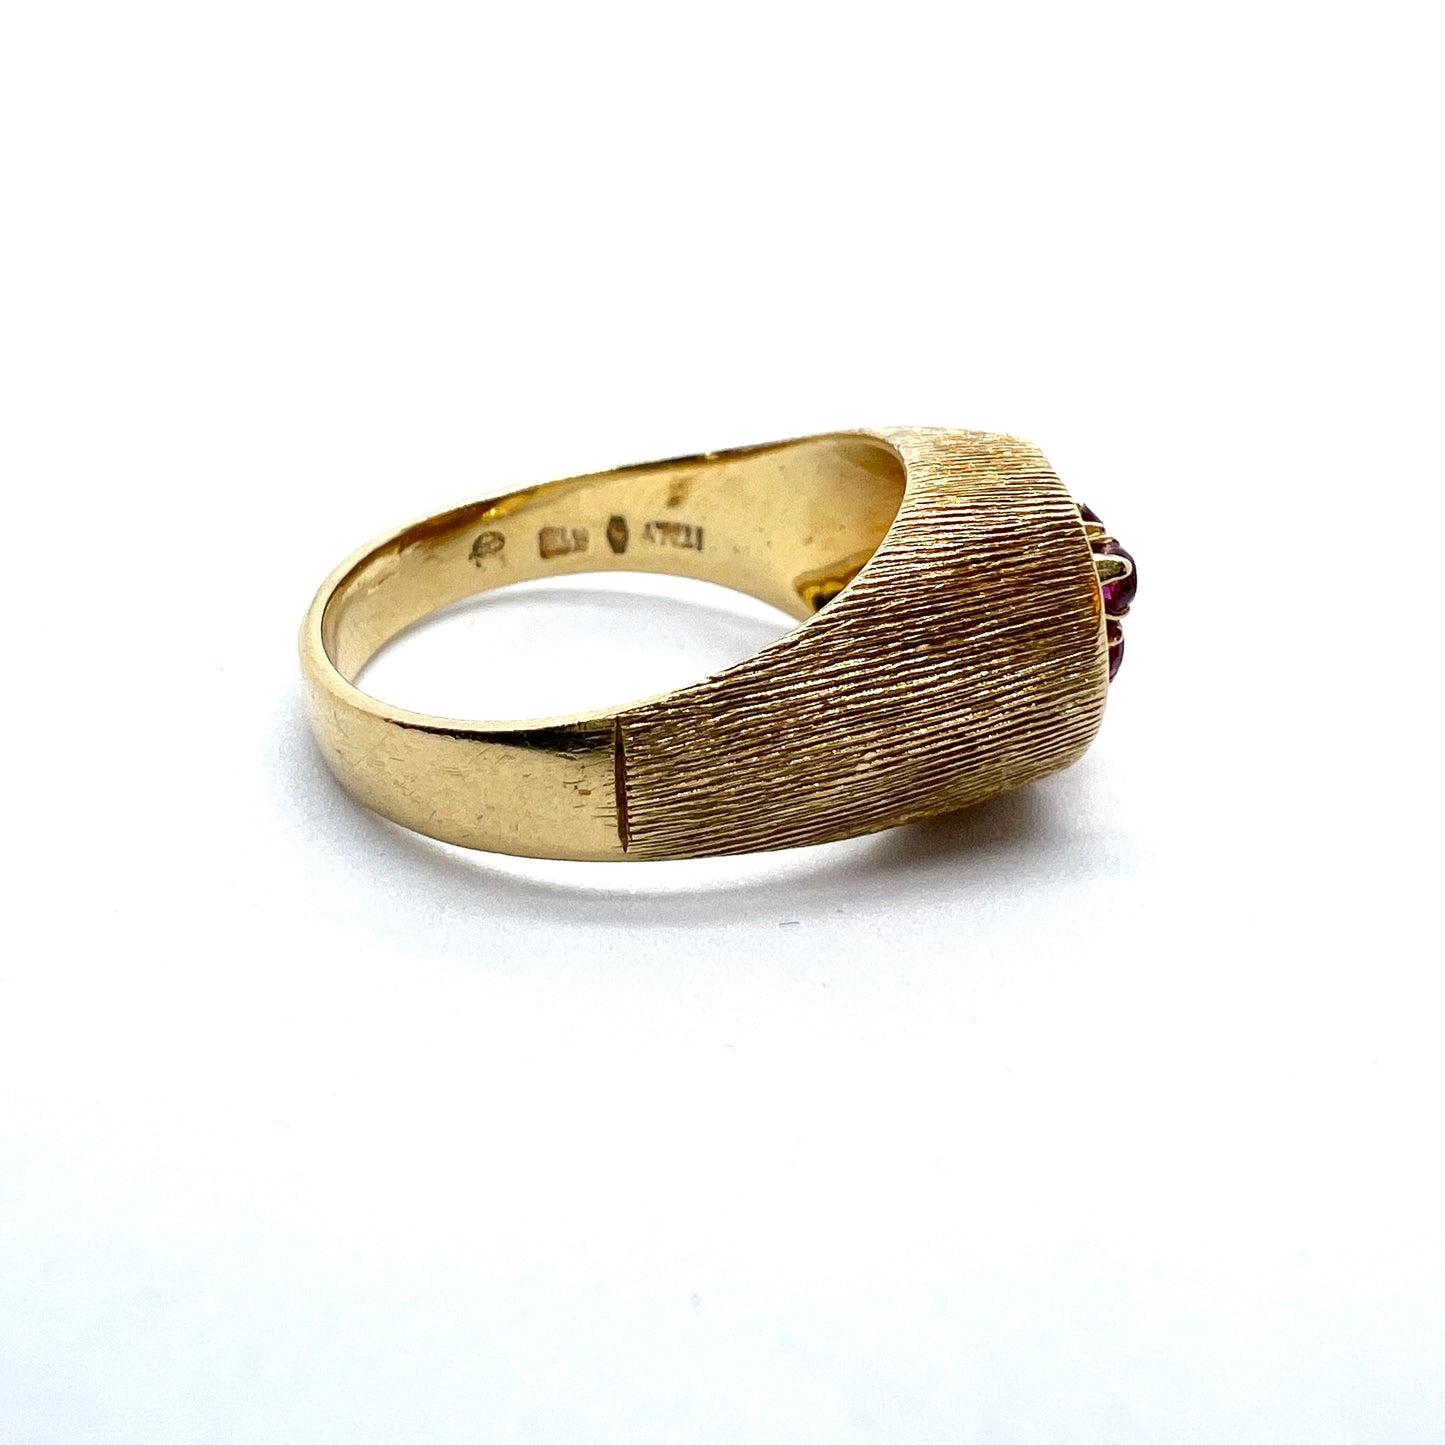 GARAVELLI ALDO, Italy c 1940s. Vintage 18k Gold Ruby Ring